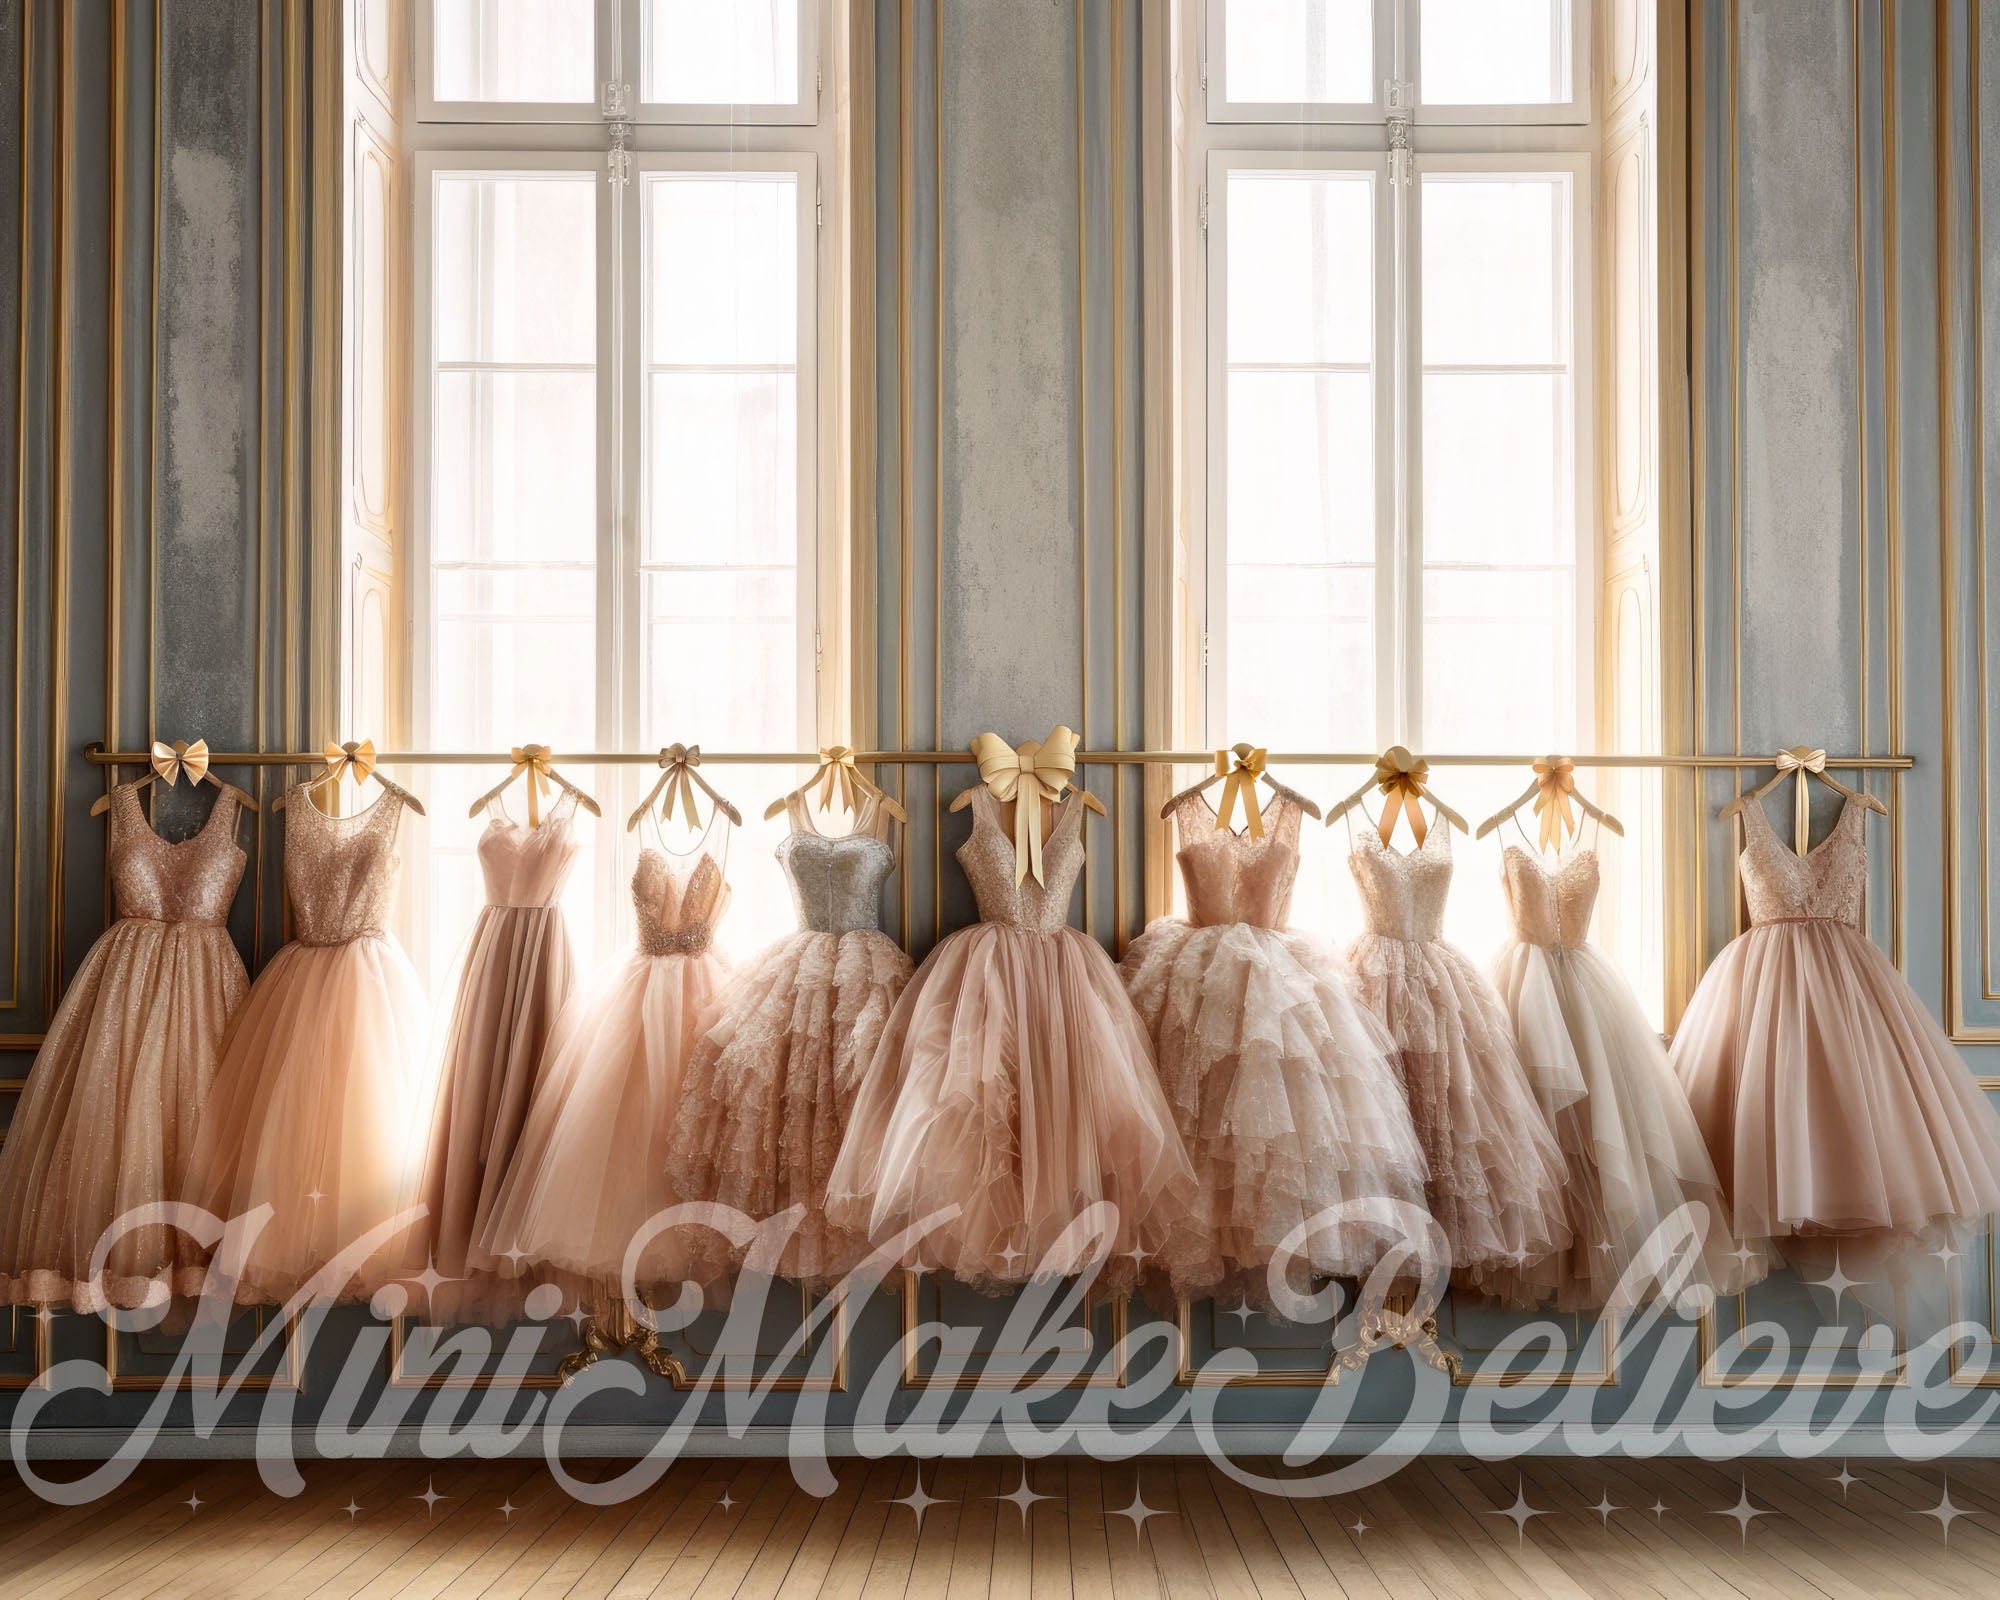 Kate Valentine Ballet Dresses in studio Backdrop Designed by Mini MakeBelieve